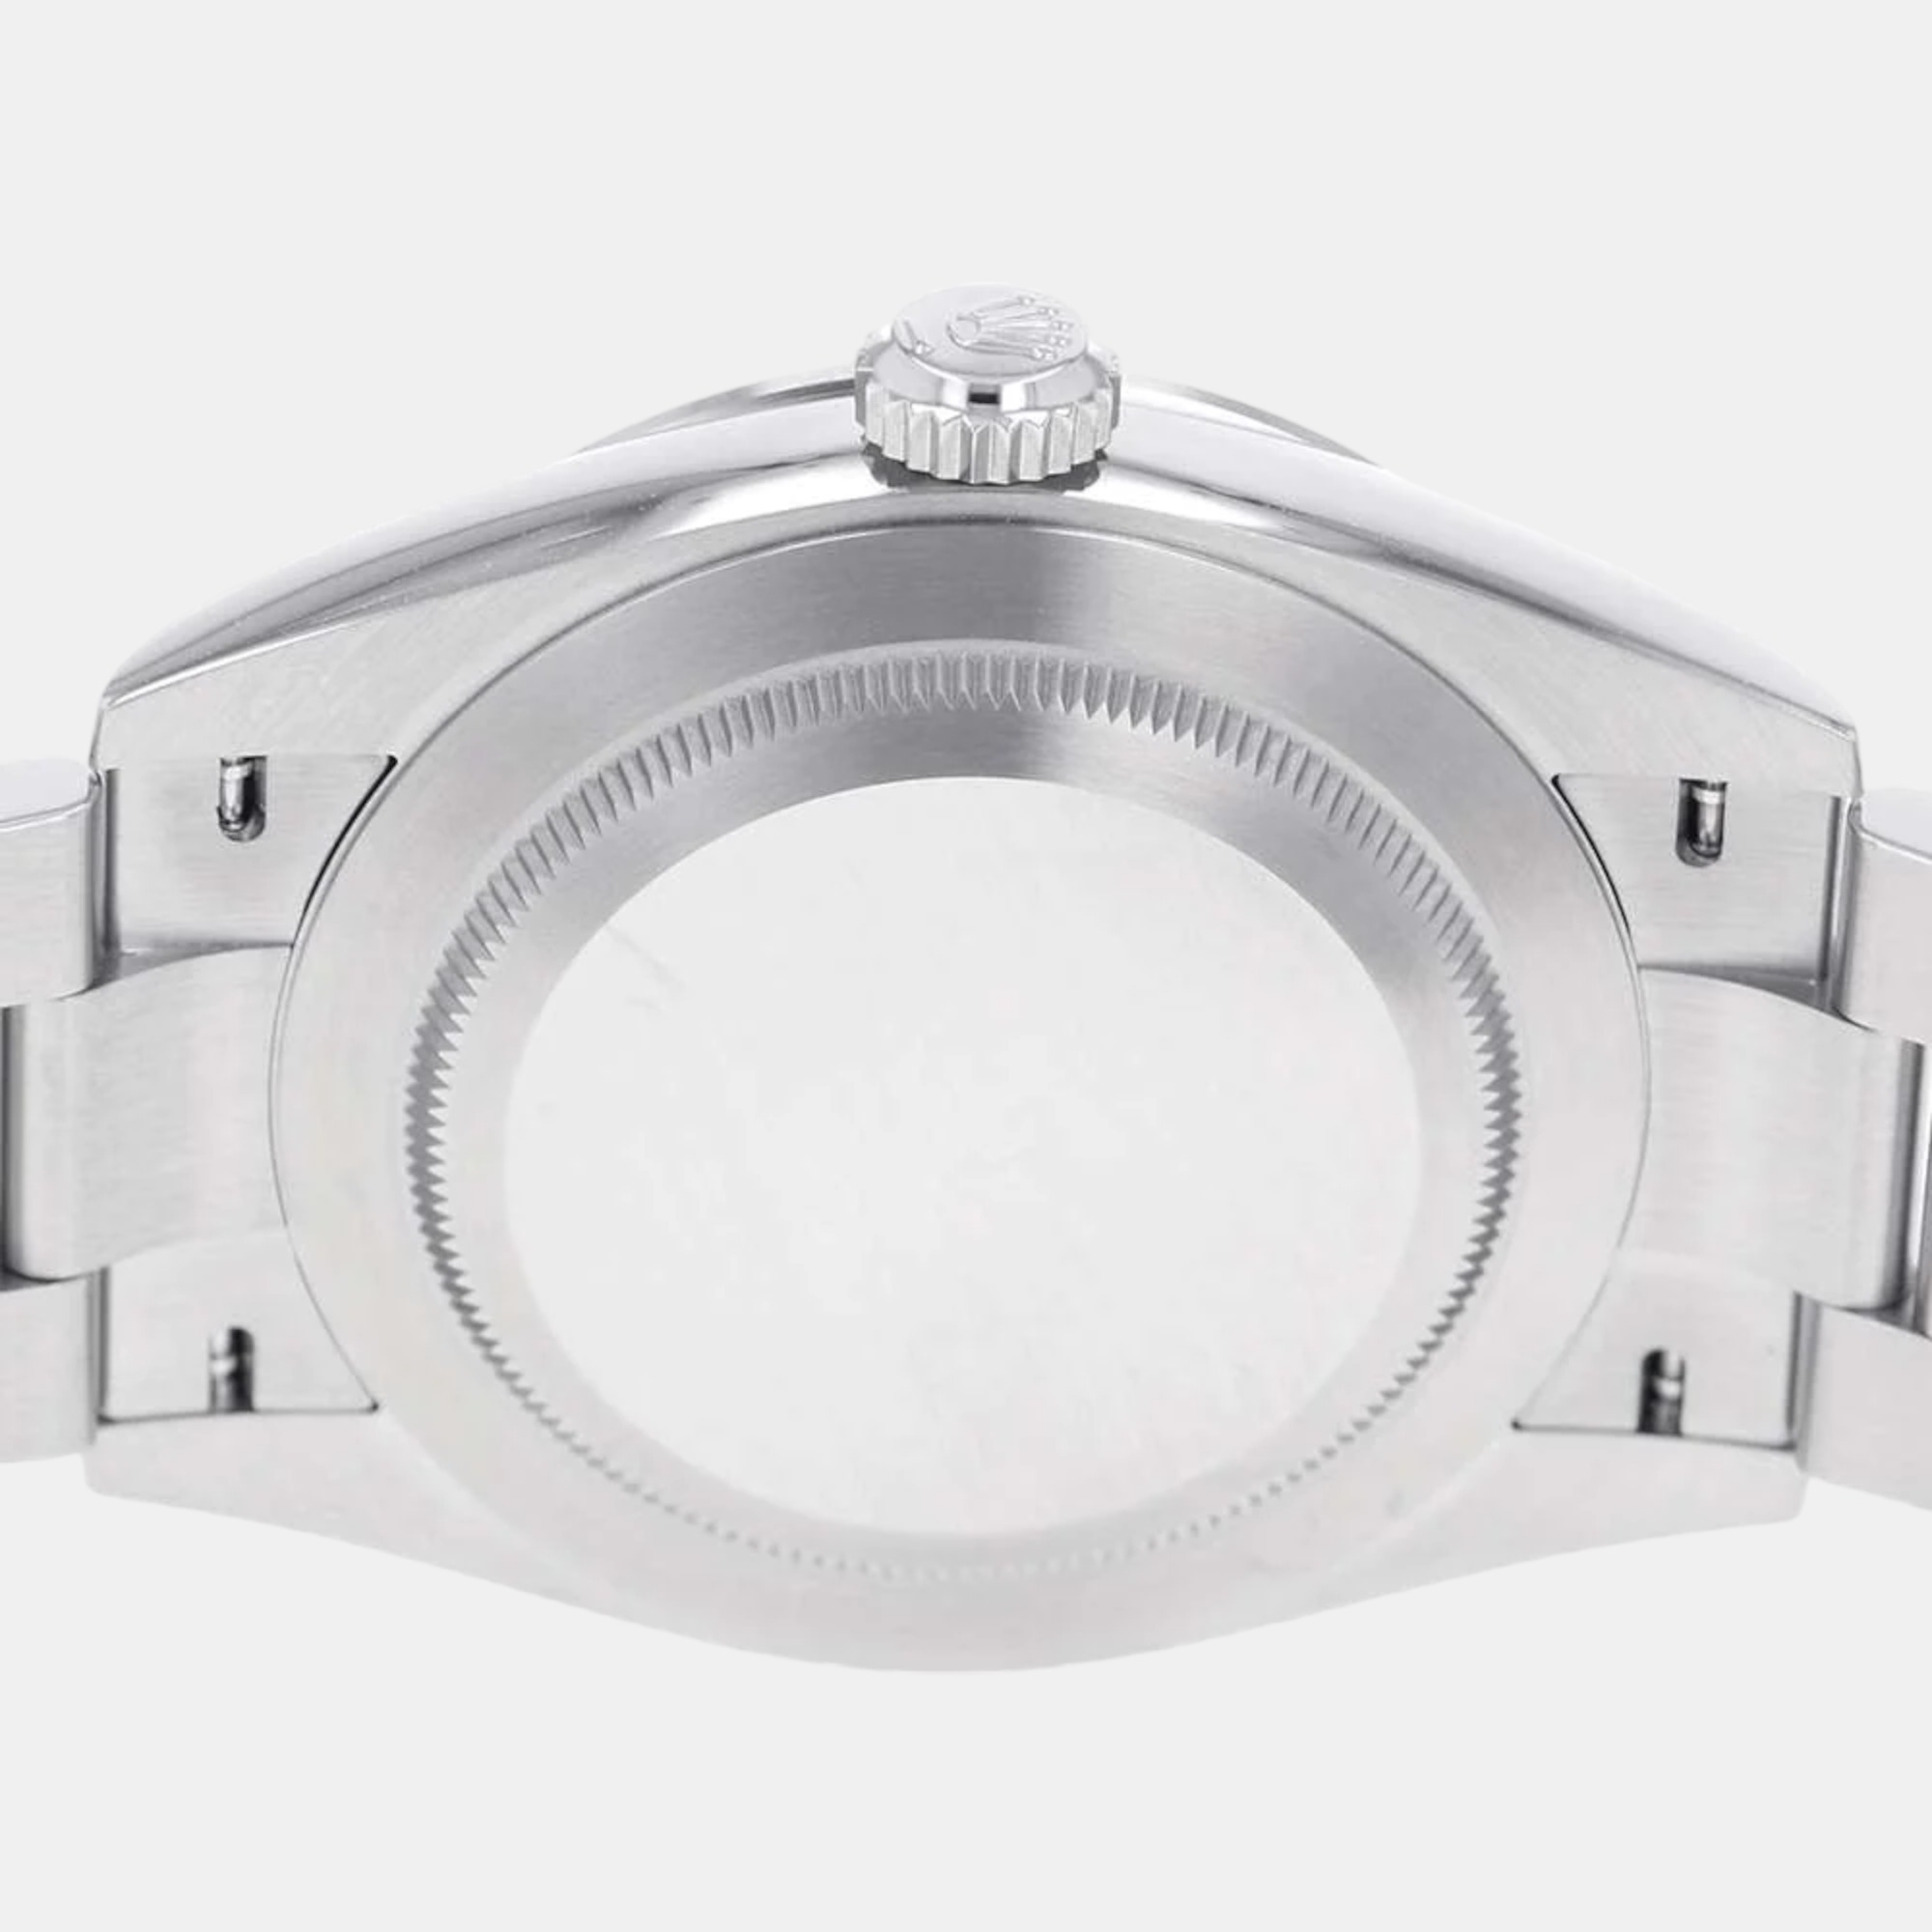 Rolex Black Stainless Steel Explorer 224270 Men's Wristwatch 40 Mm